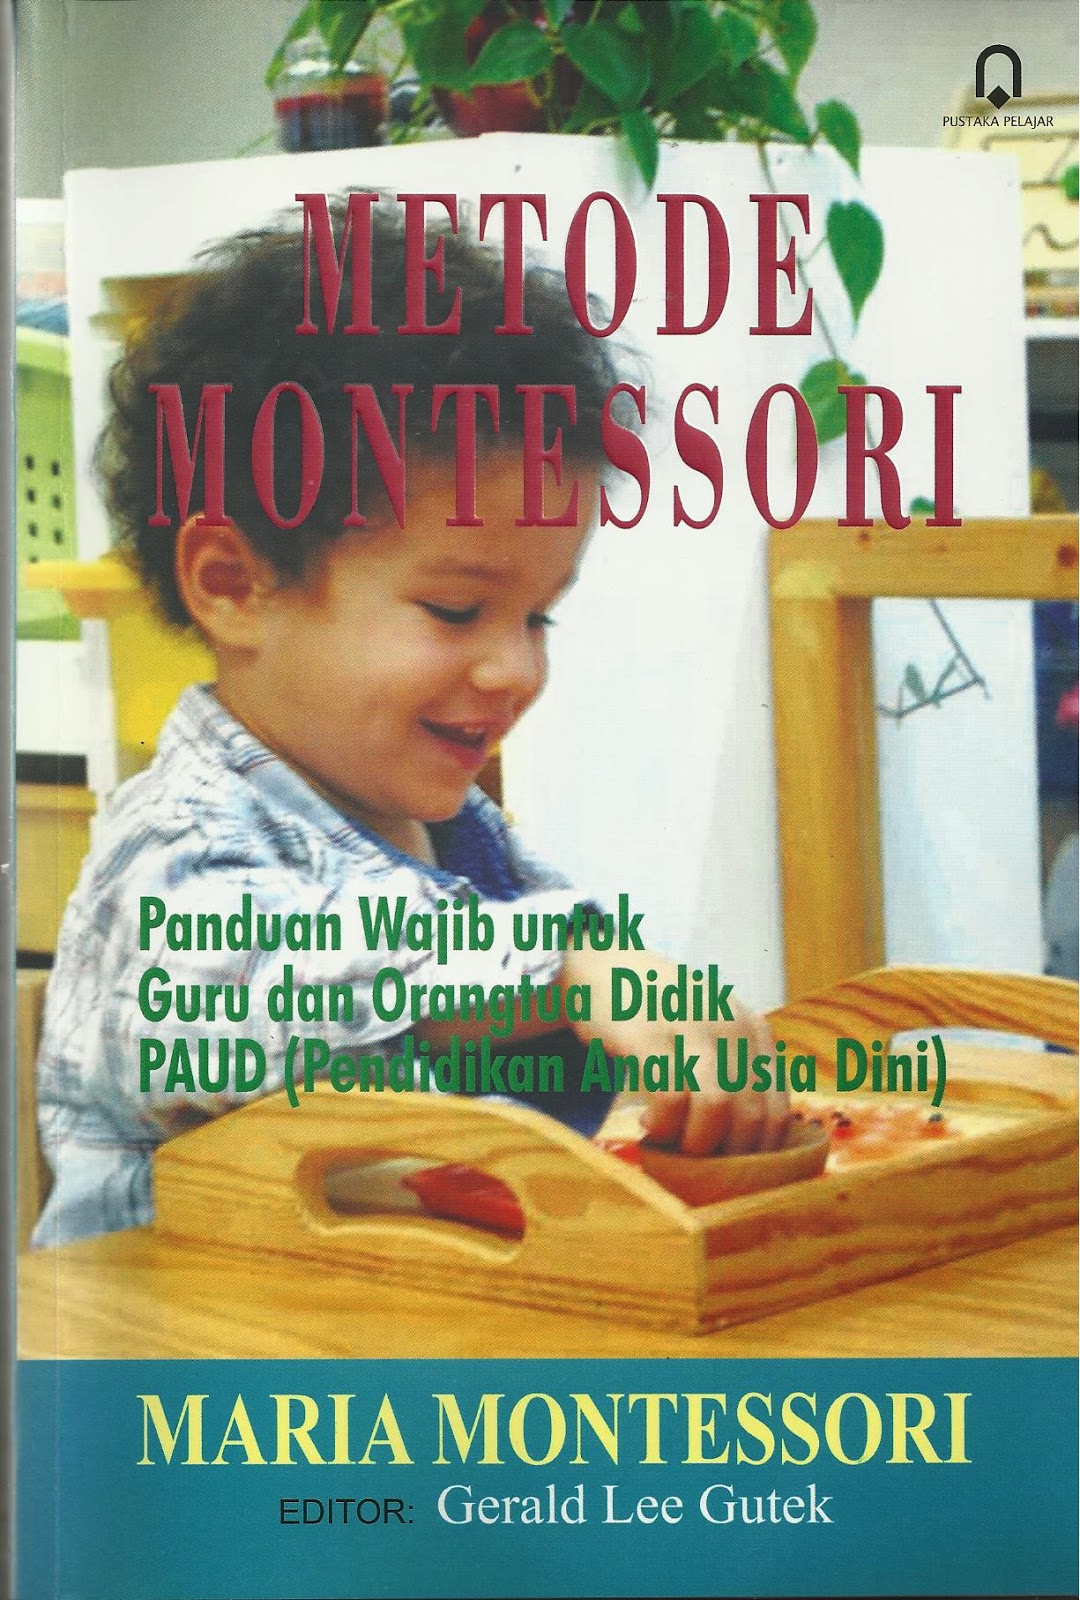 buku panduan cubase 5 bahasa indonesia